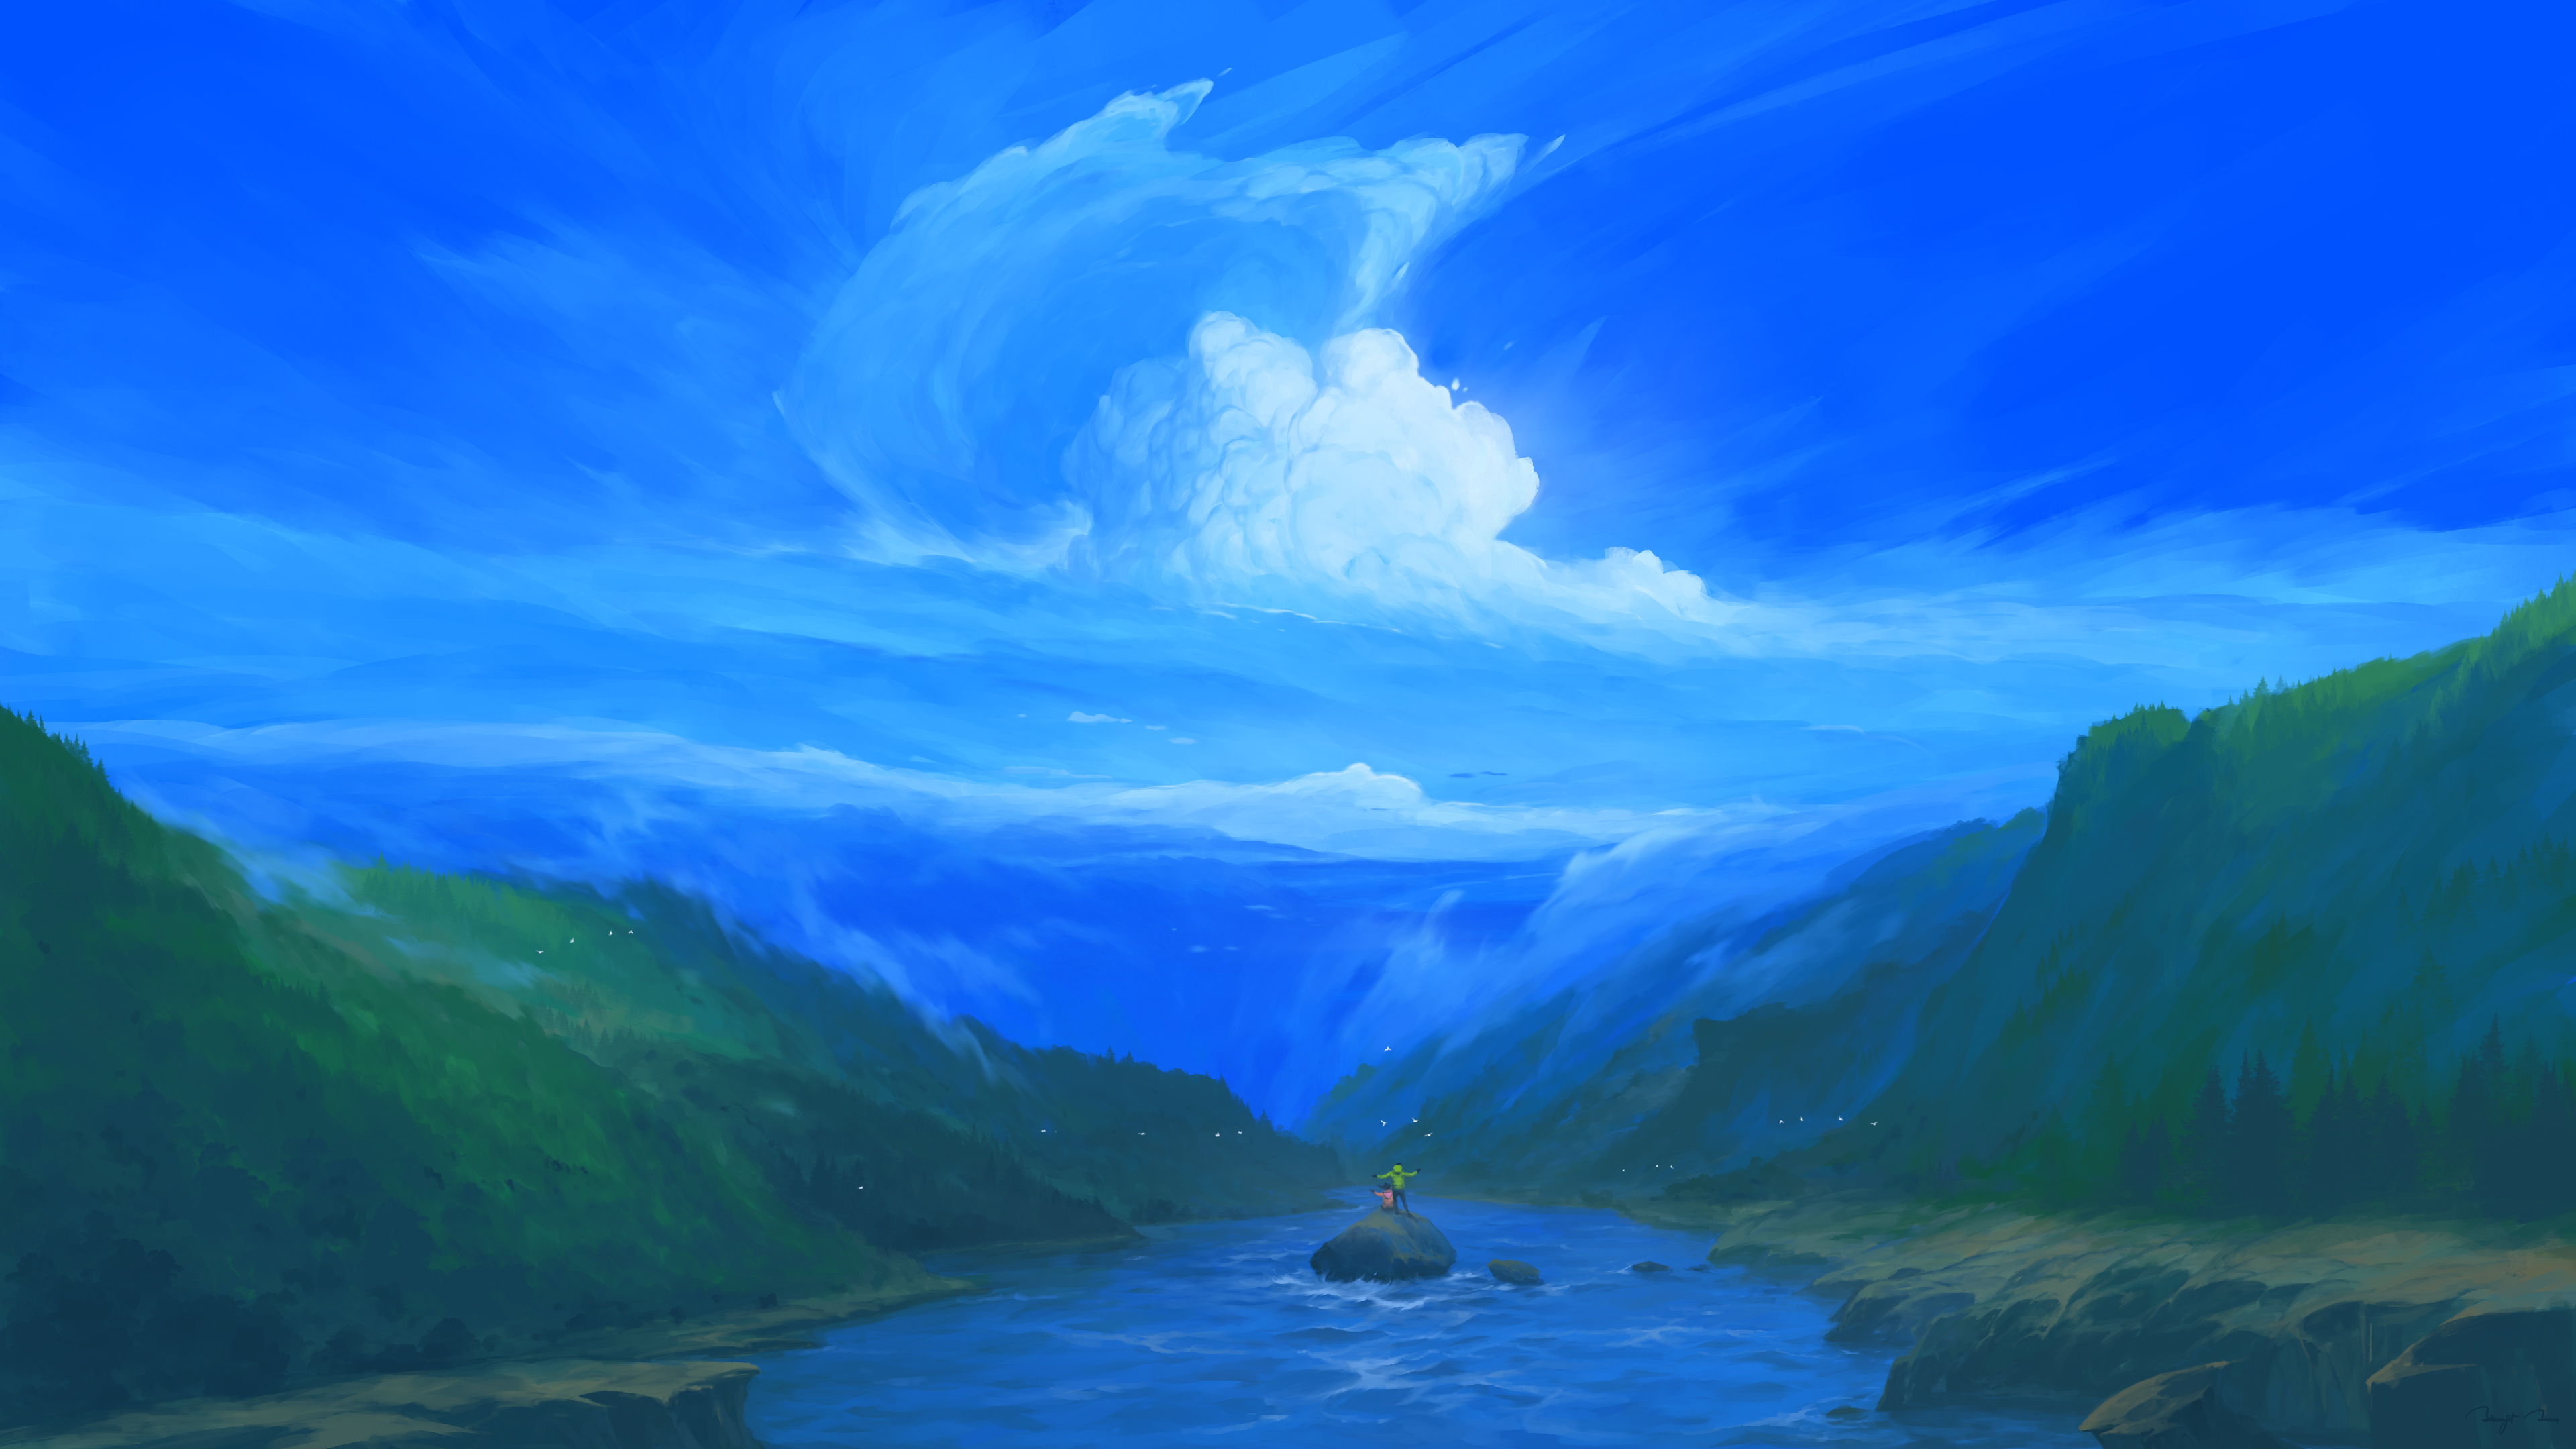 BisBiswas Landscape Clouds River Water Couple Digital Art Artwork Illustration Painting Nature 4K Si 3840x2160